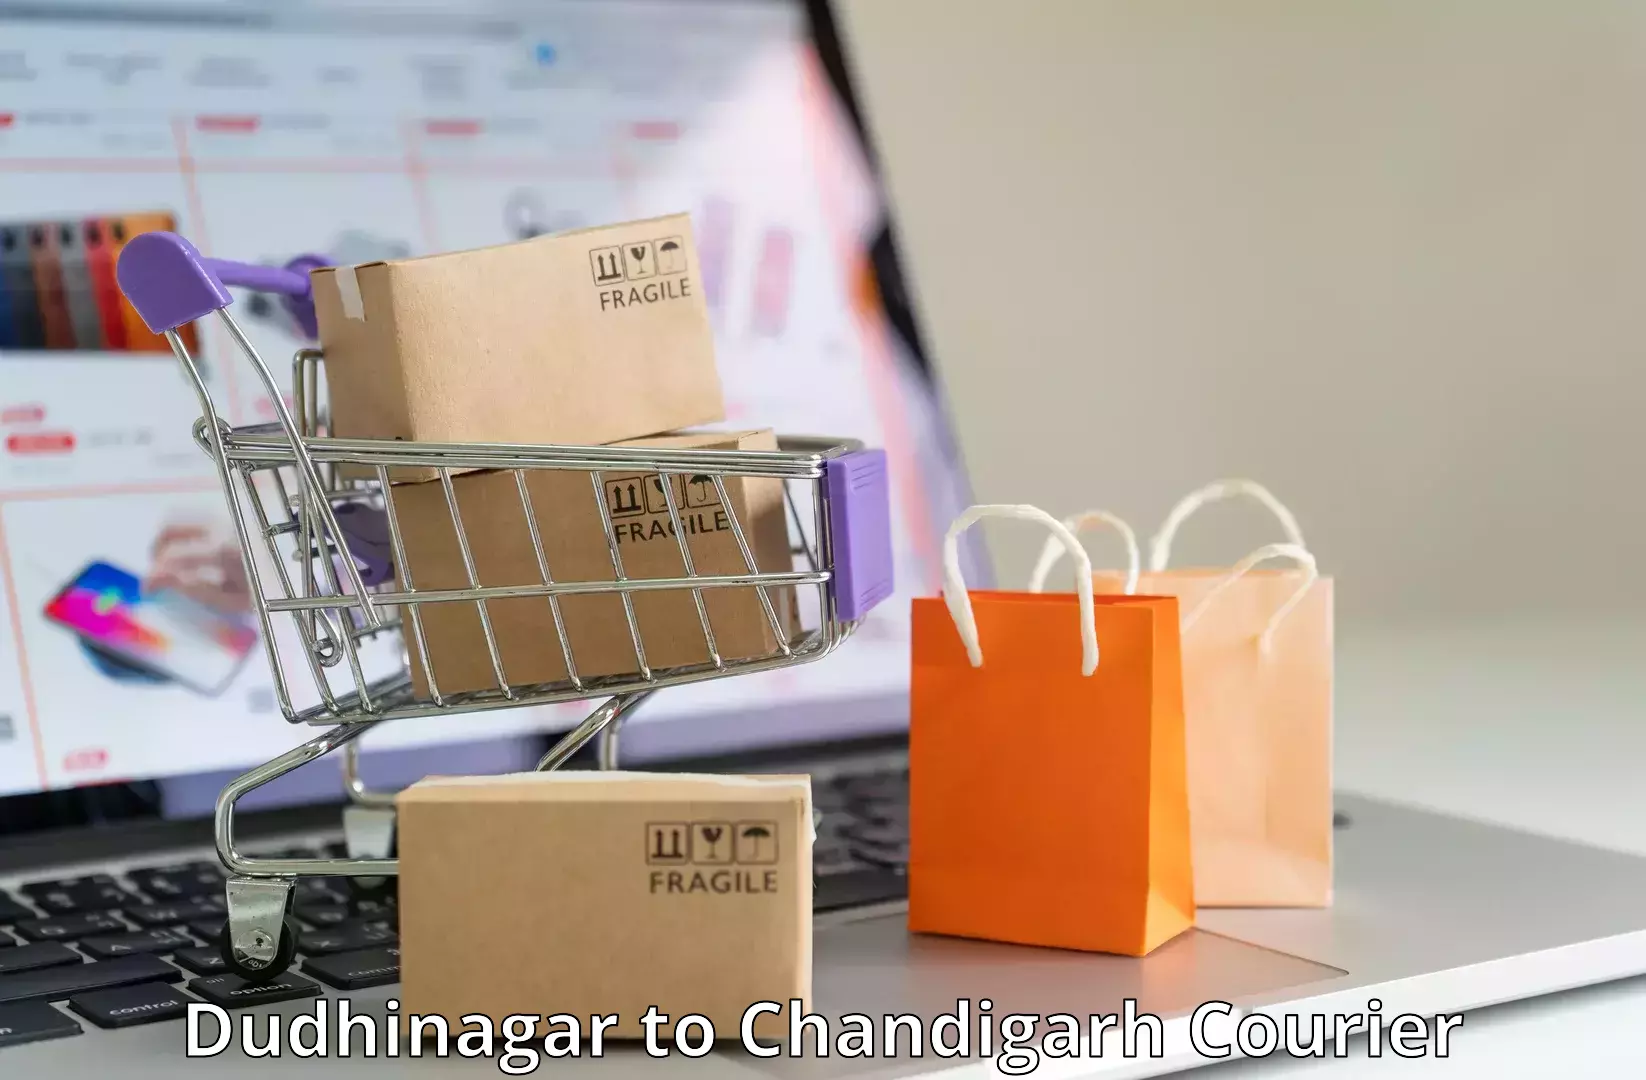 Global shipping solutions Dudhinagar to Chandigarh